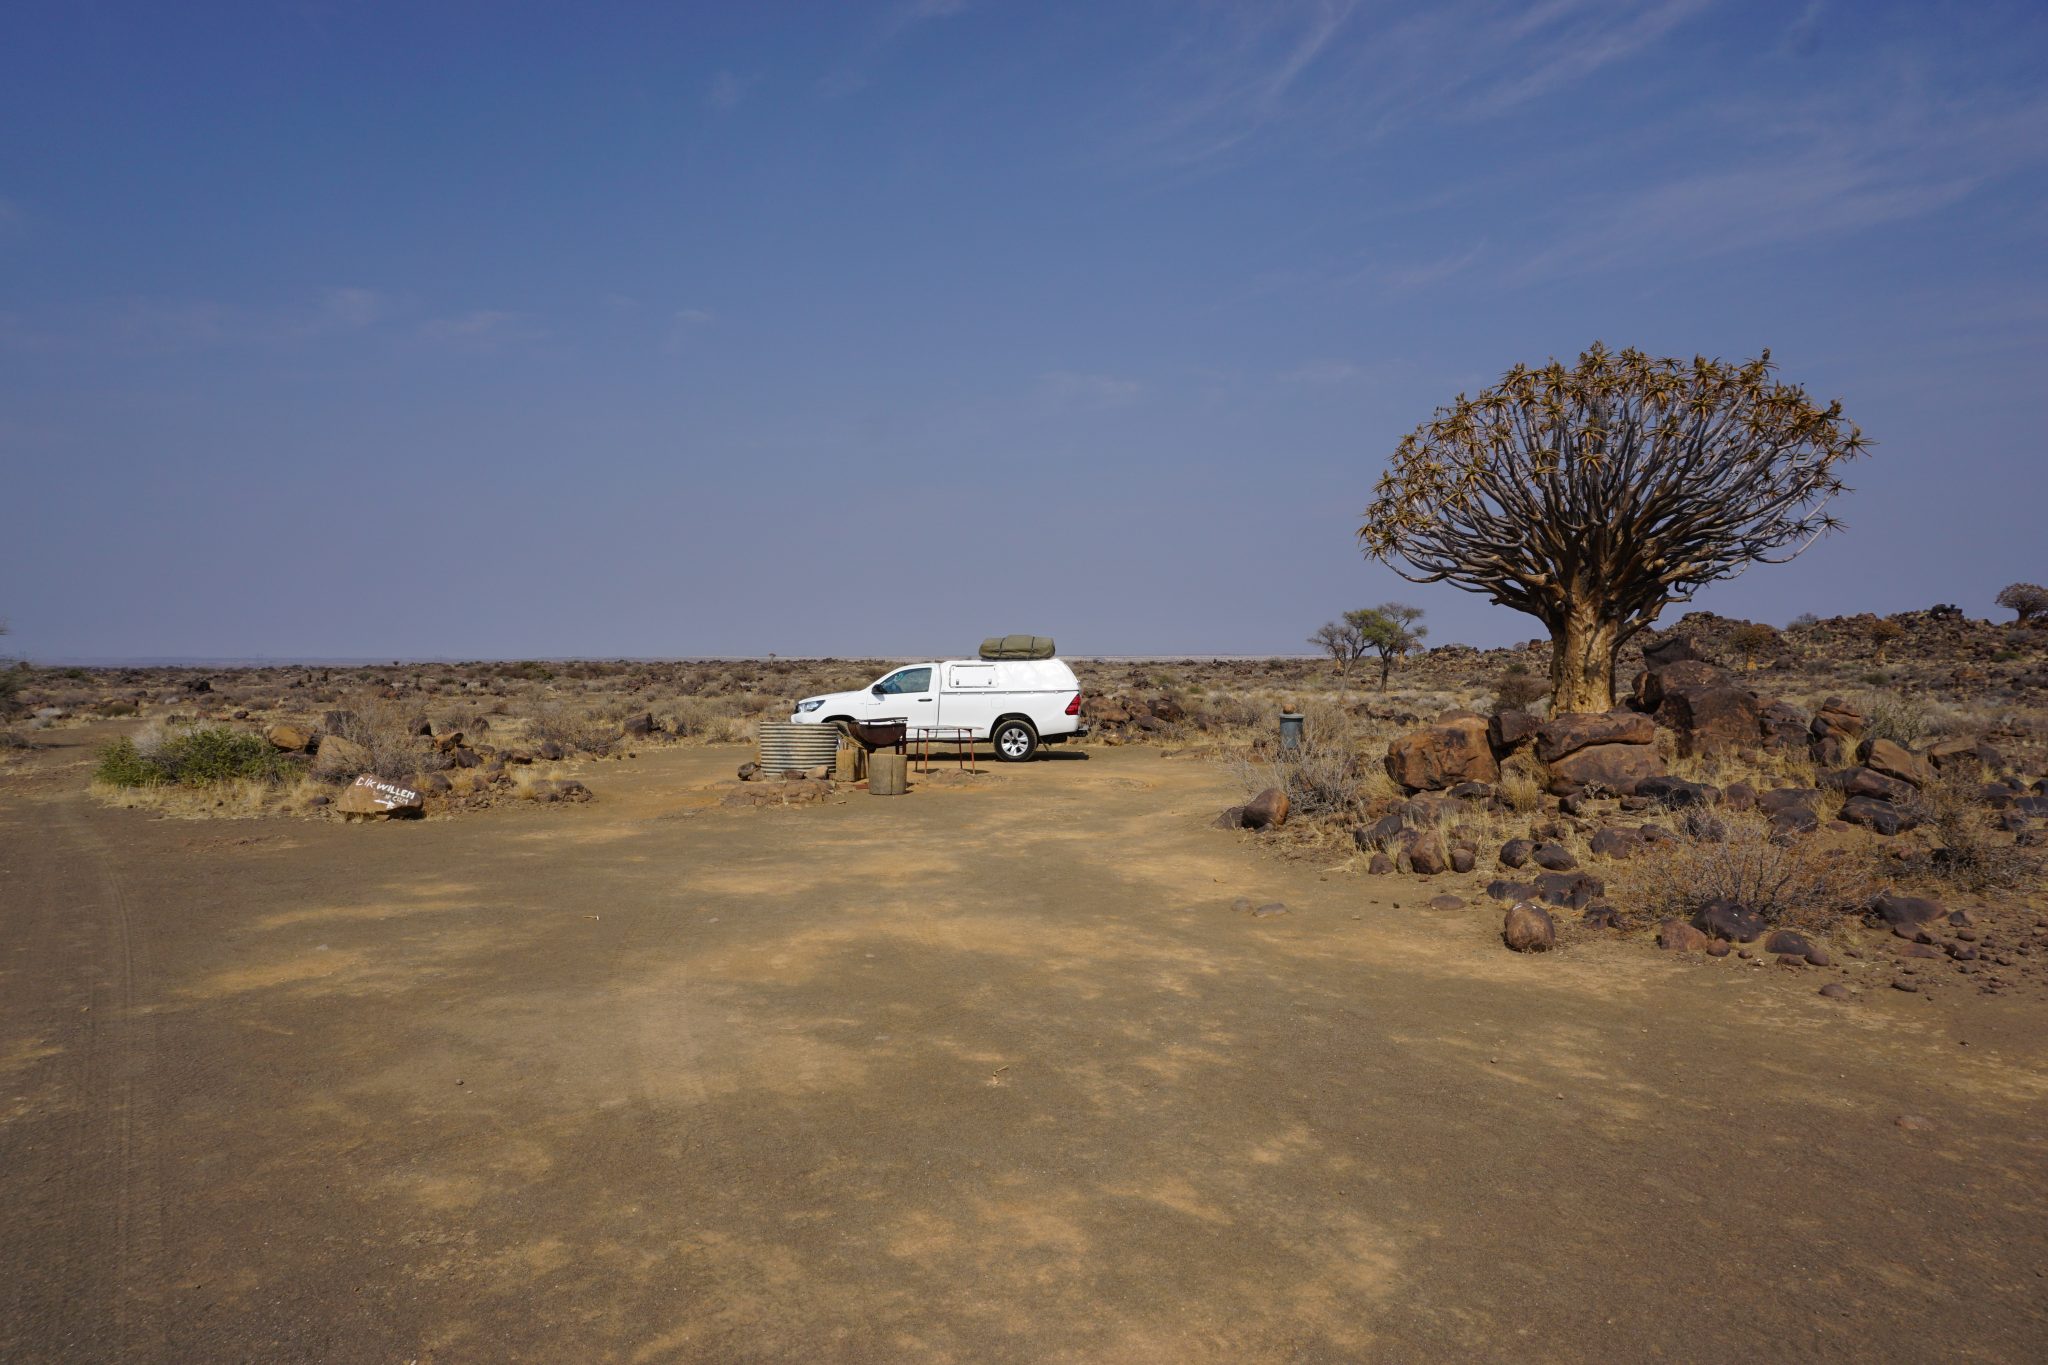 Namibia Reise: Unser Camper